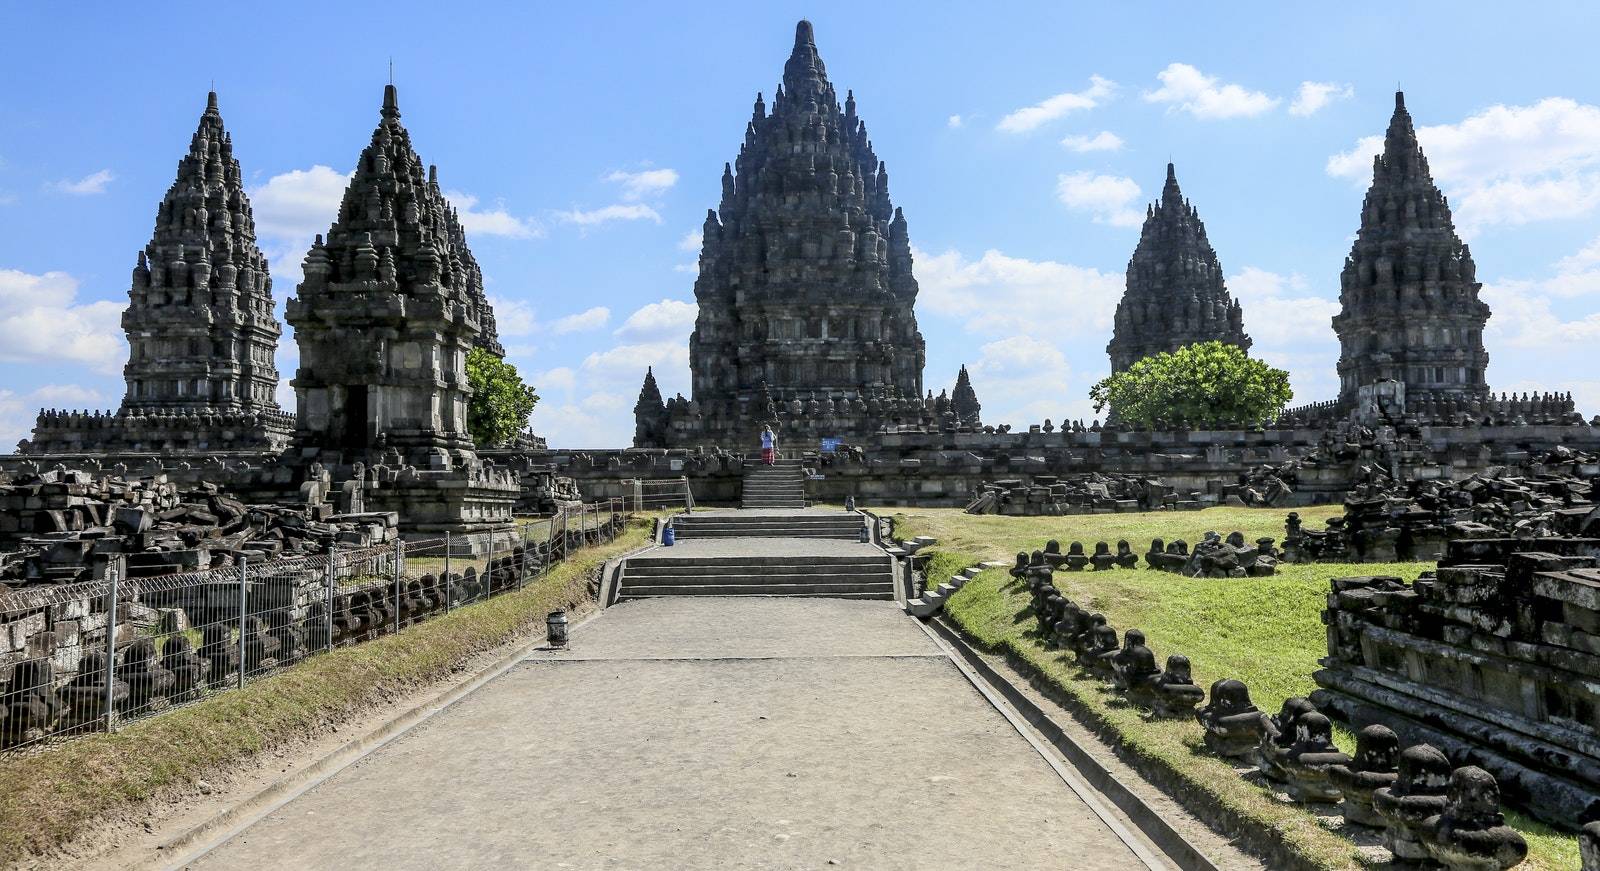 The Prambanan Temples in Indonesia